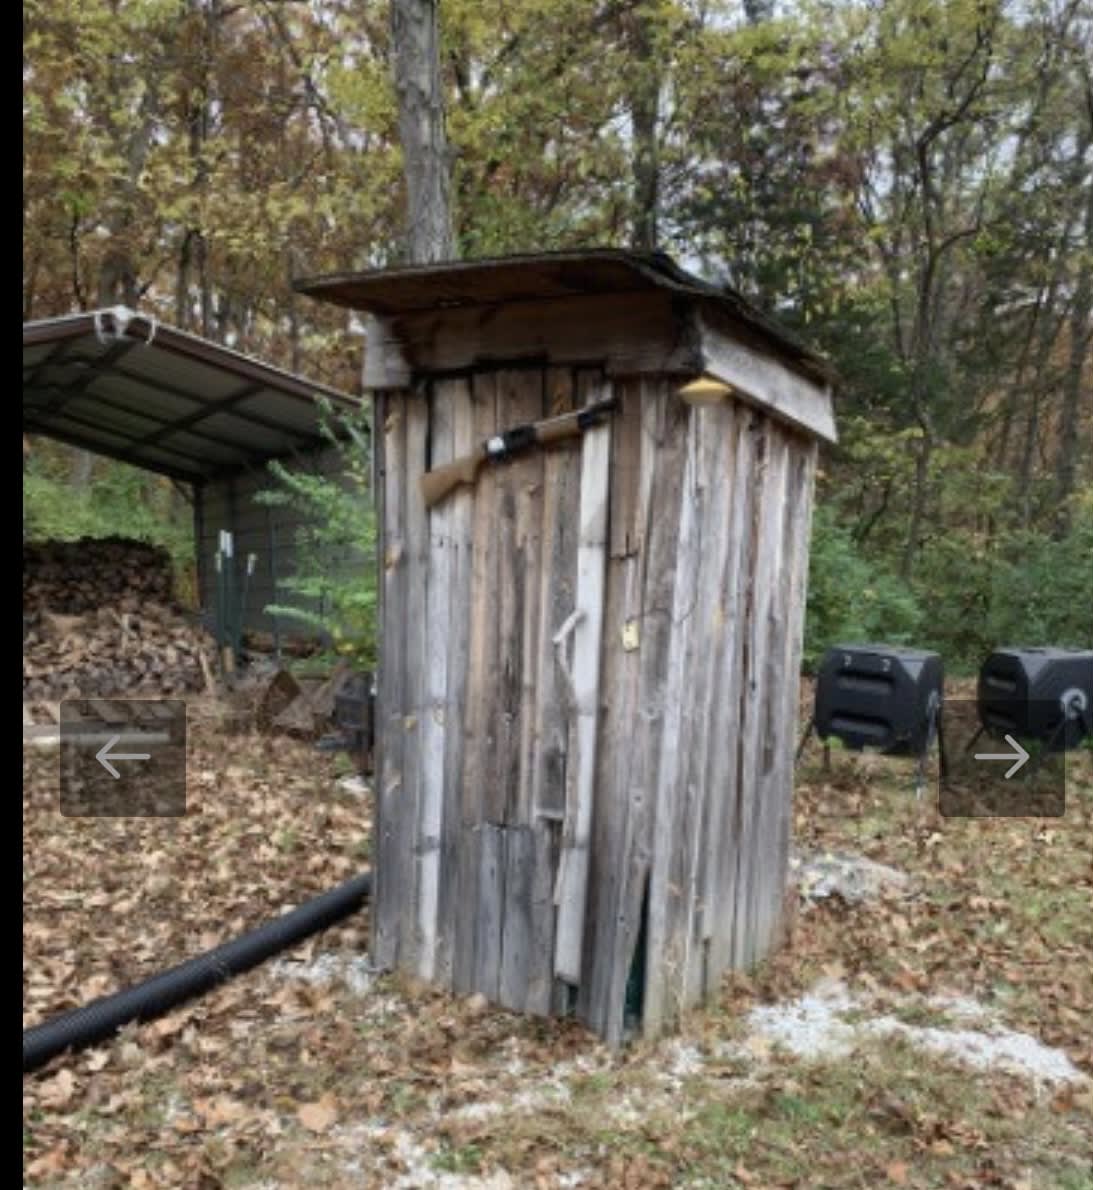 Porta potty/outhouse 